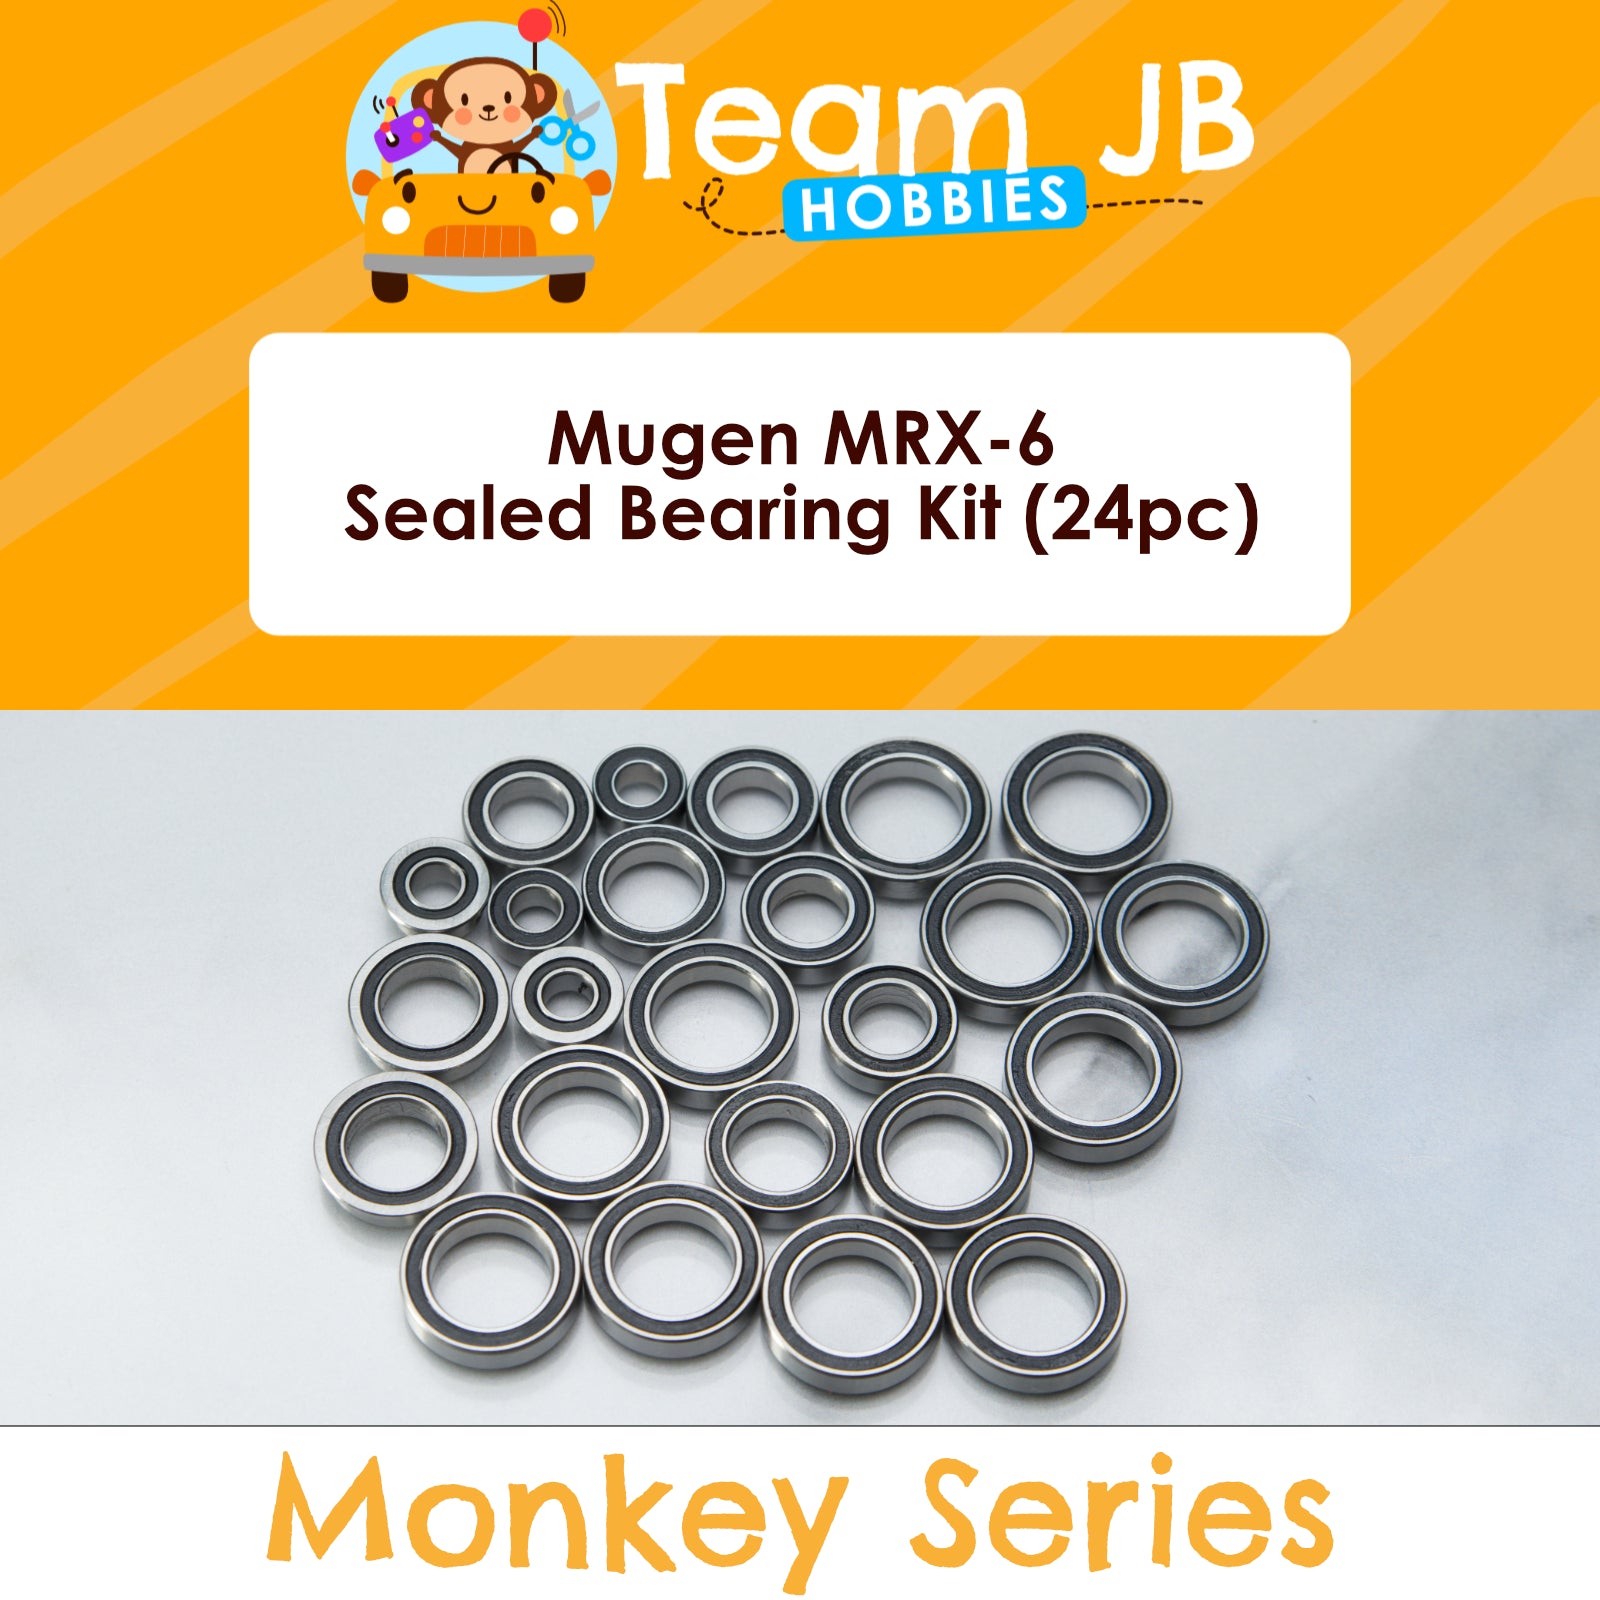 Mugen MRX-6 - Sealed Bearing Kit